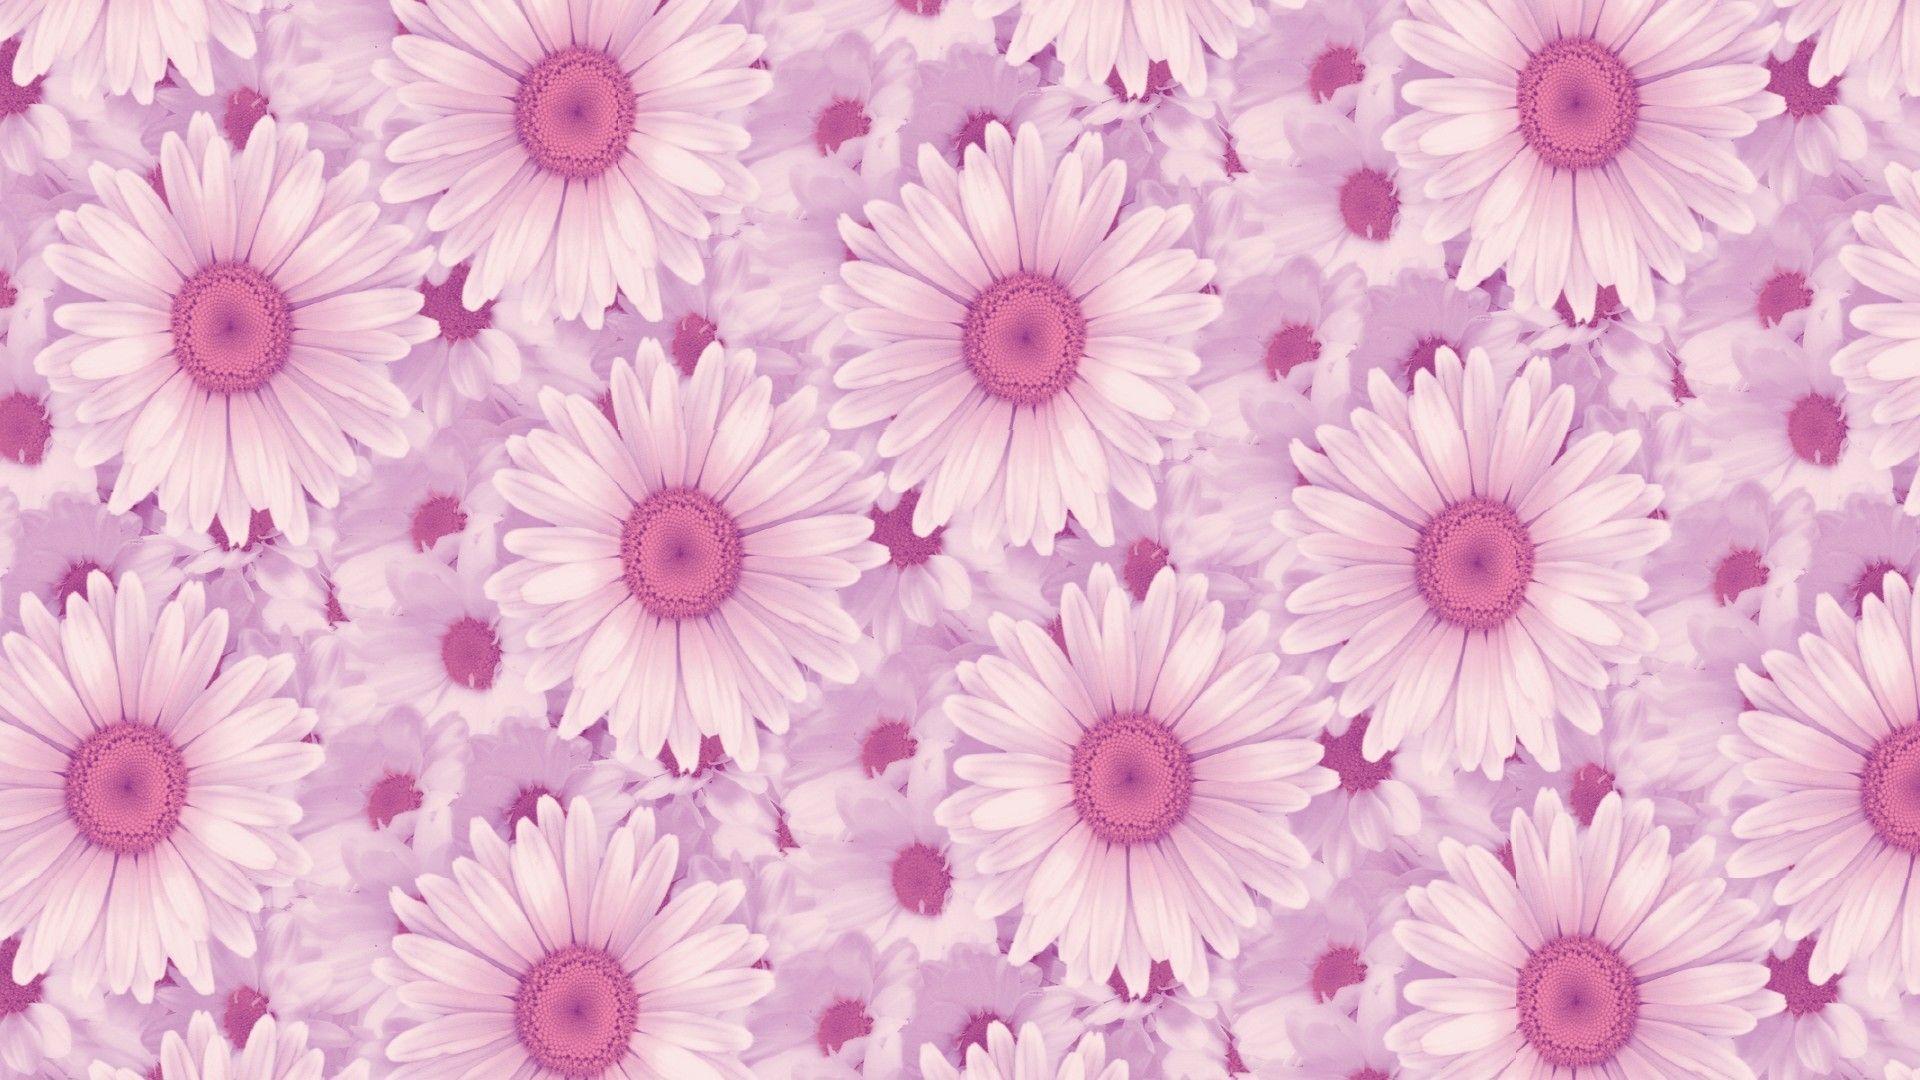 Pink Aesthetic Tumblr Desktop Wallpapers - Top Free Pink ...